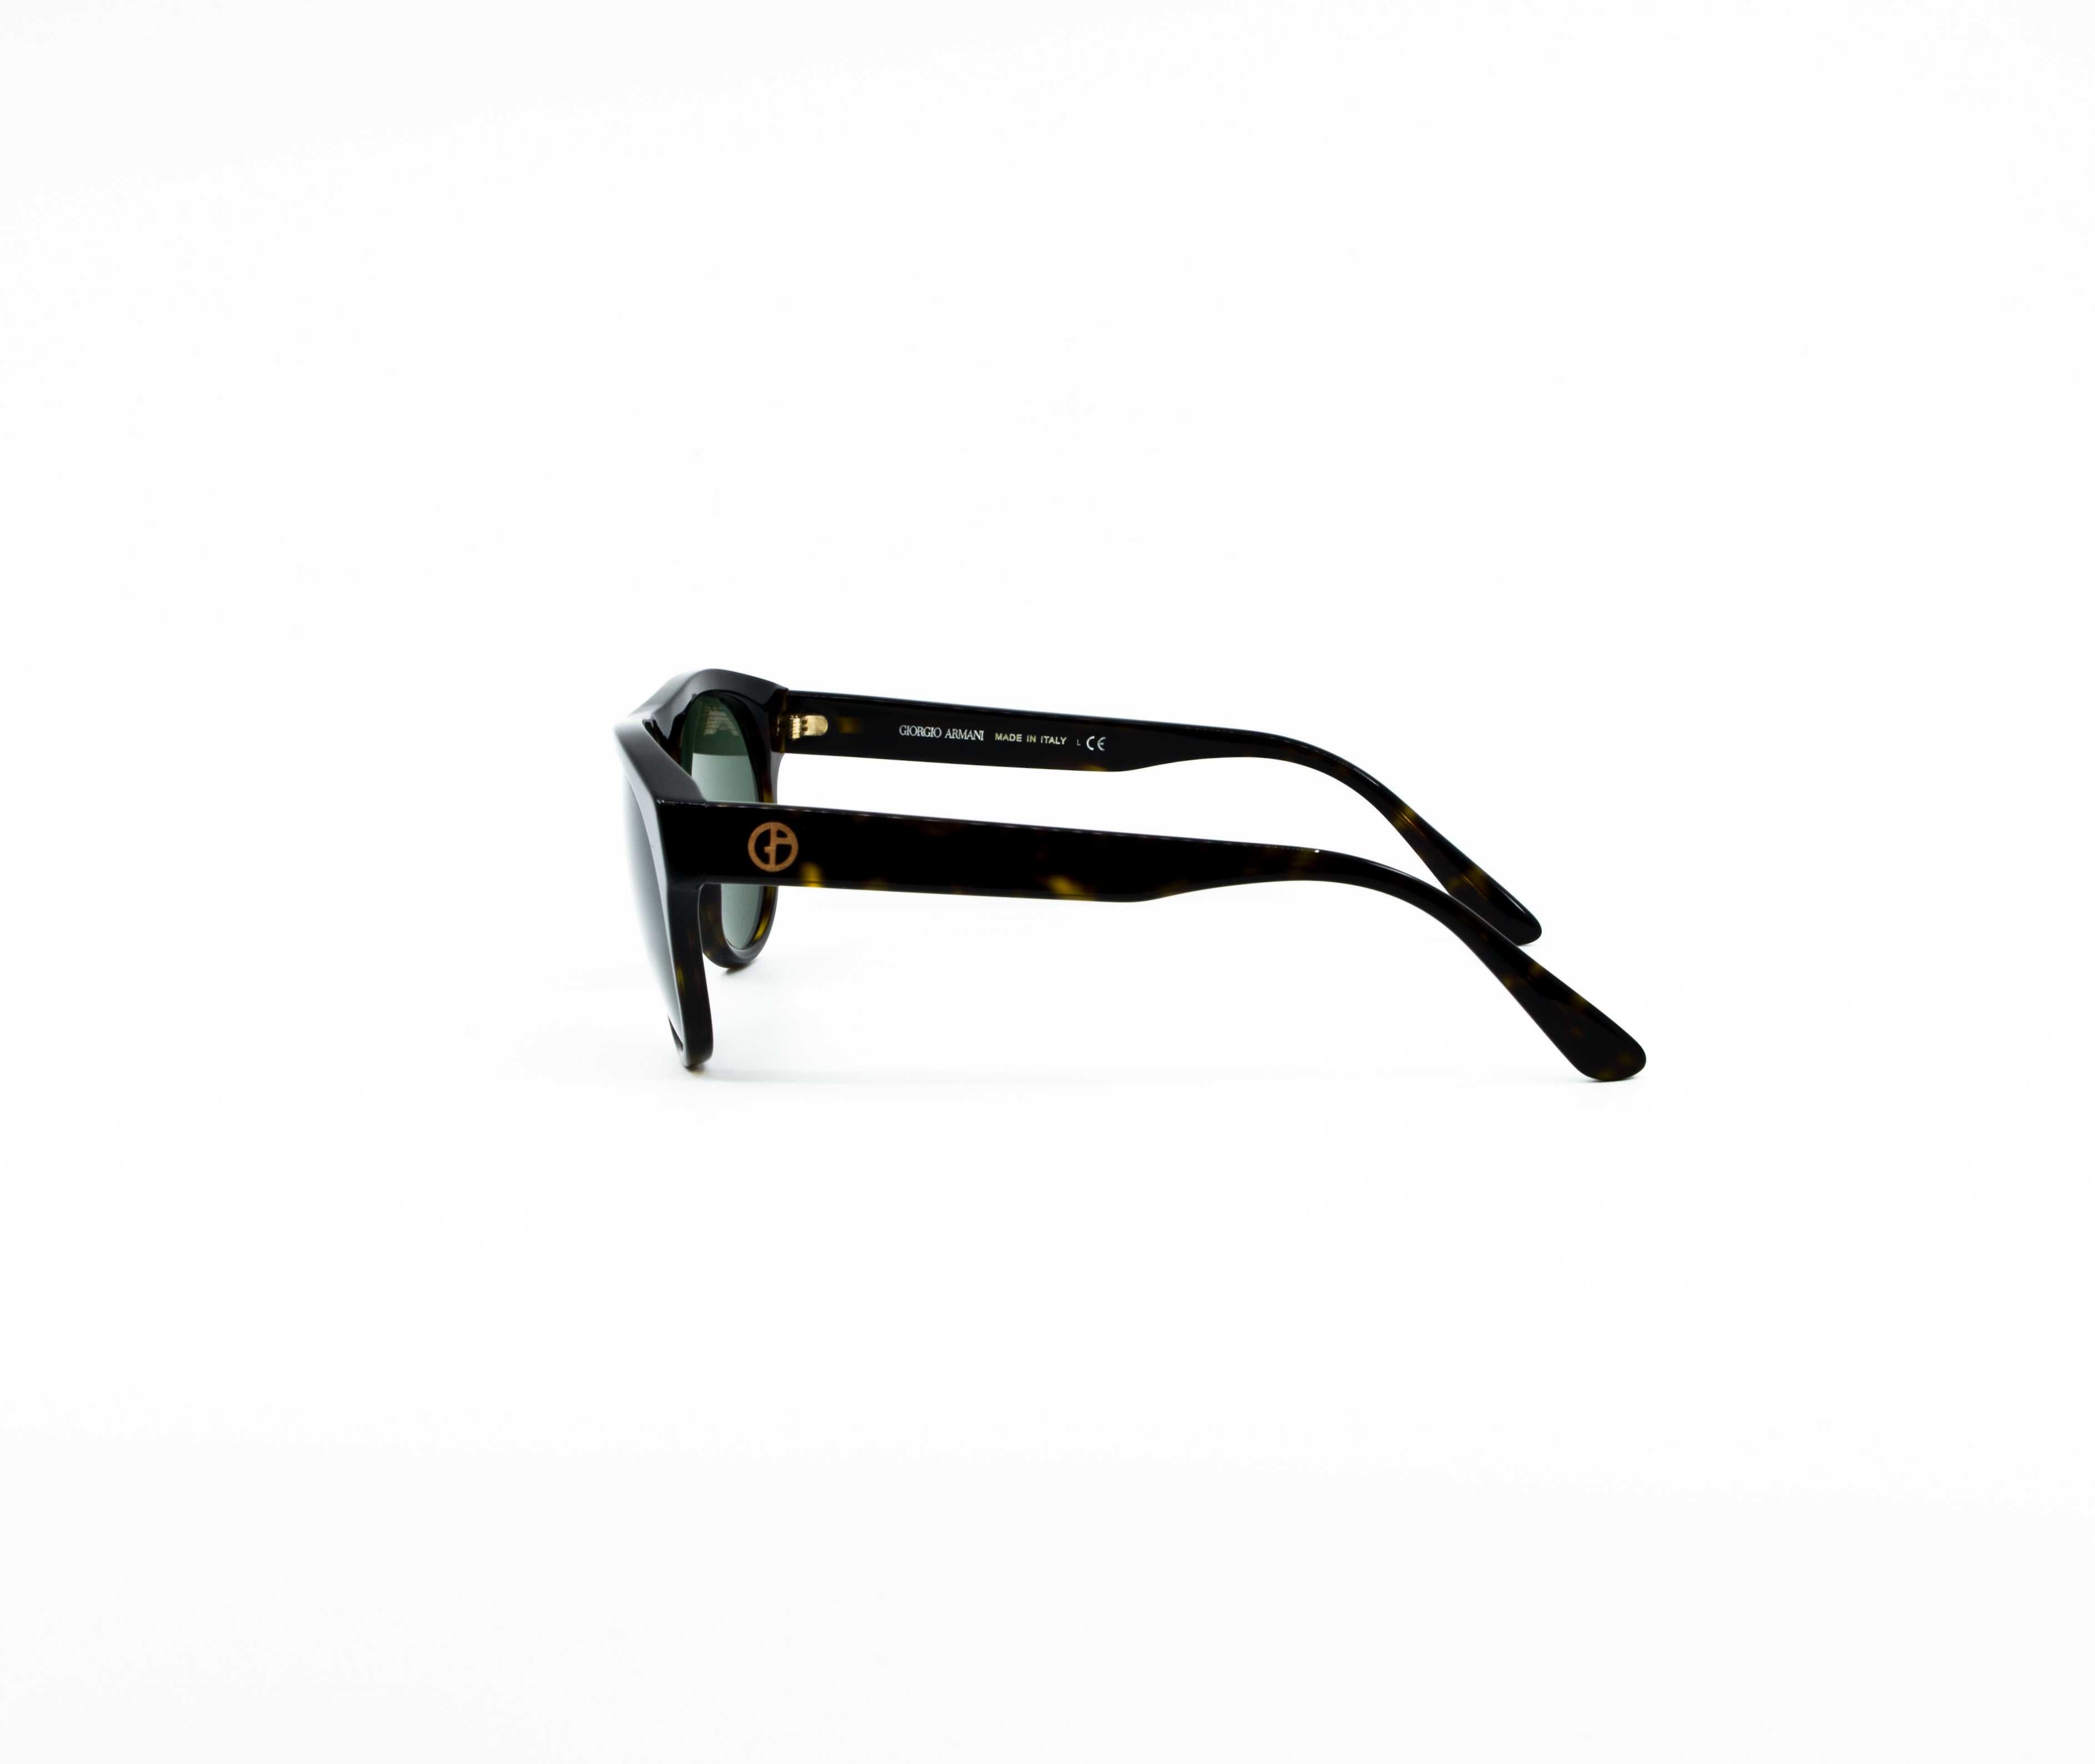 Giorgio Armani Оригинал очки новые окуляри стекло